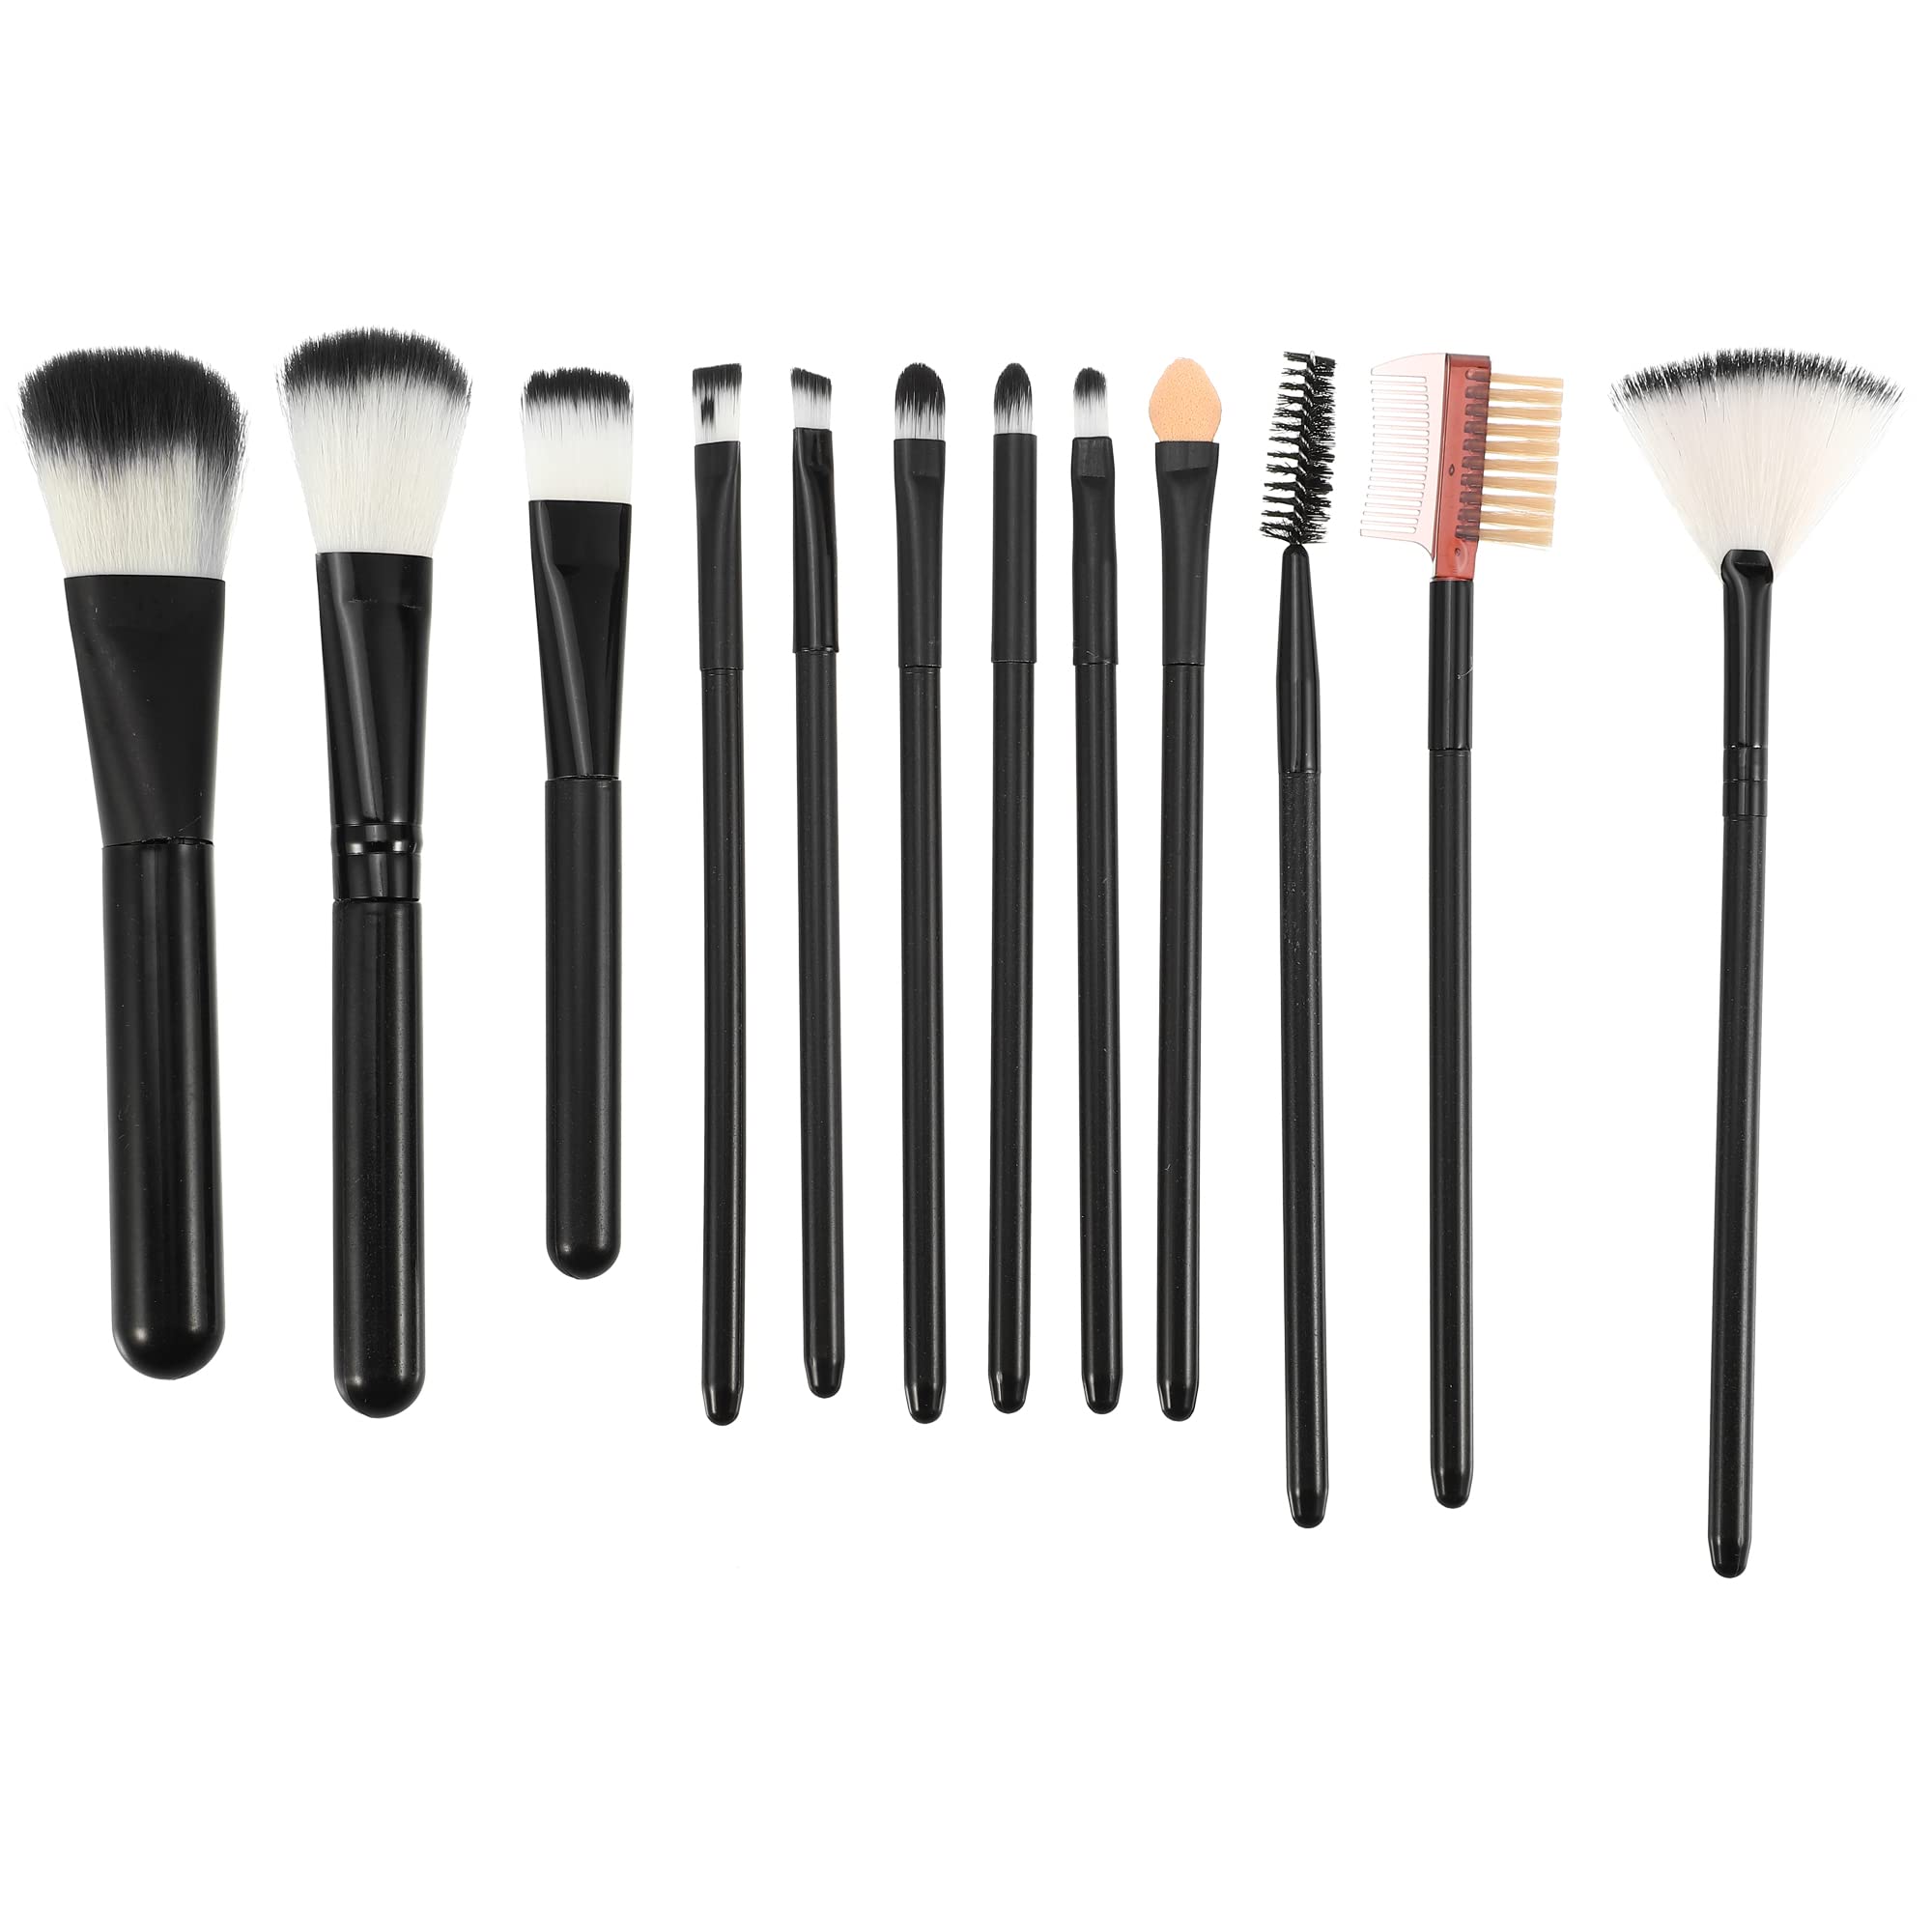 Premium Makeup Brushes 12 Pcs Makeup Brush Set Travel Brush Wholesale High Quality Black Makeup Brush Set